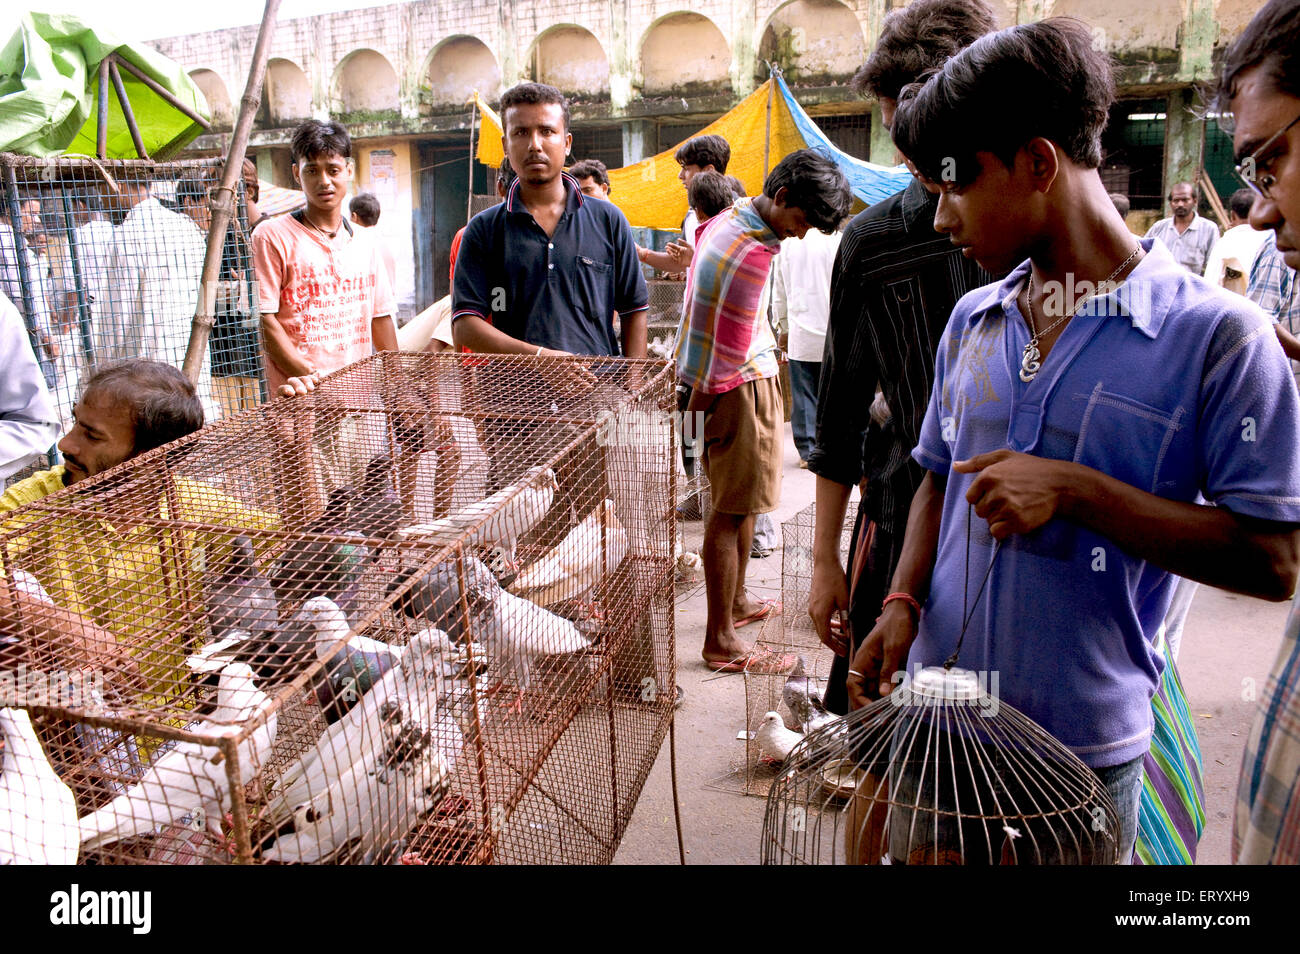 Aviary bird selling market scene at Galif street ; Kolkata Calcutta ; West Bengal ; India Stock Photo